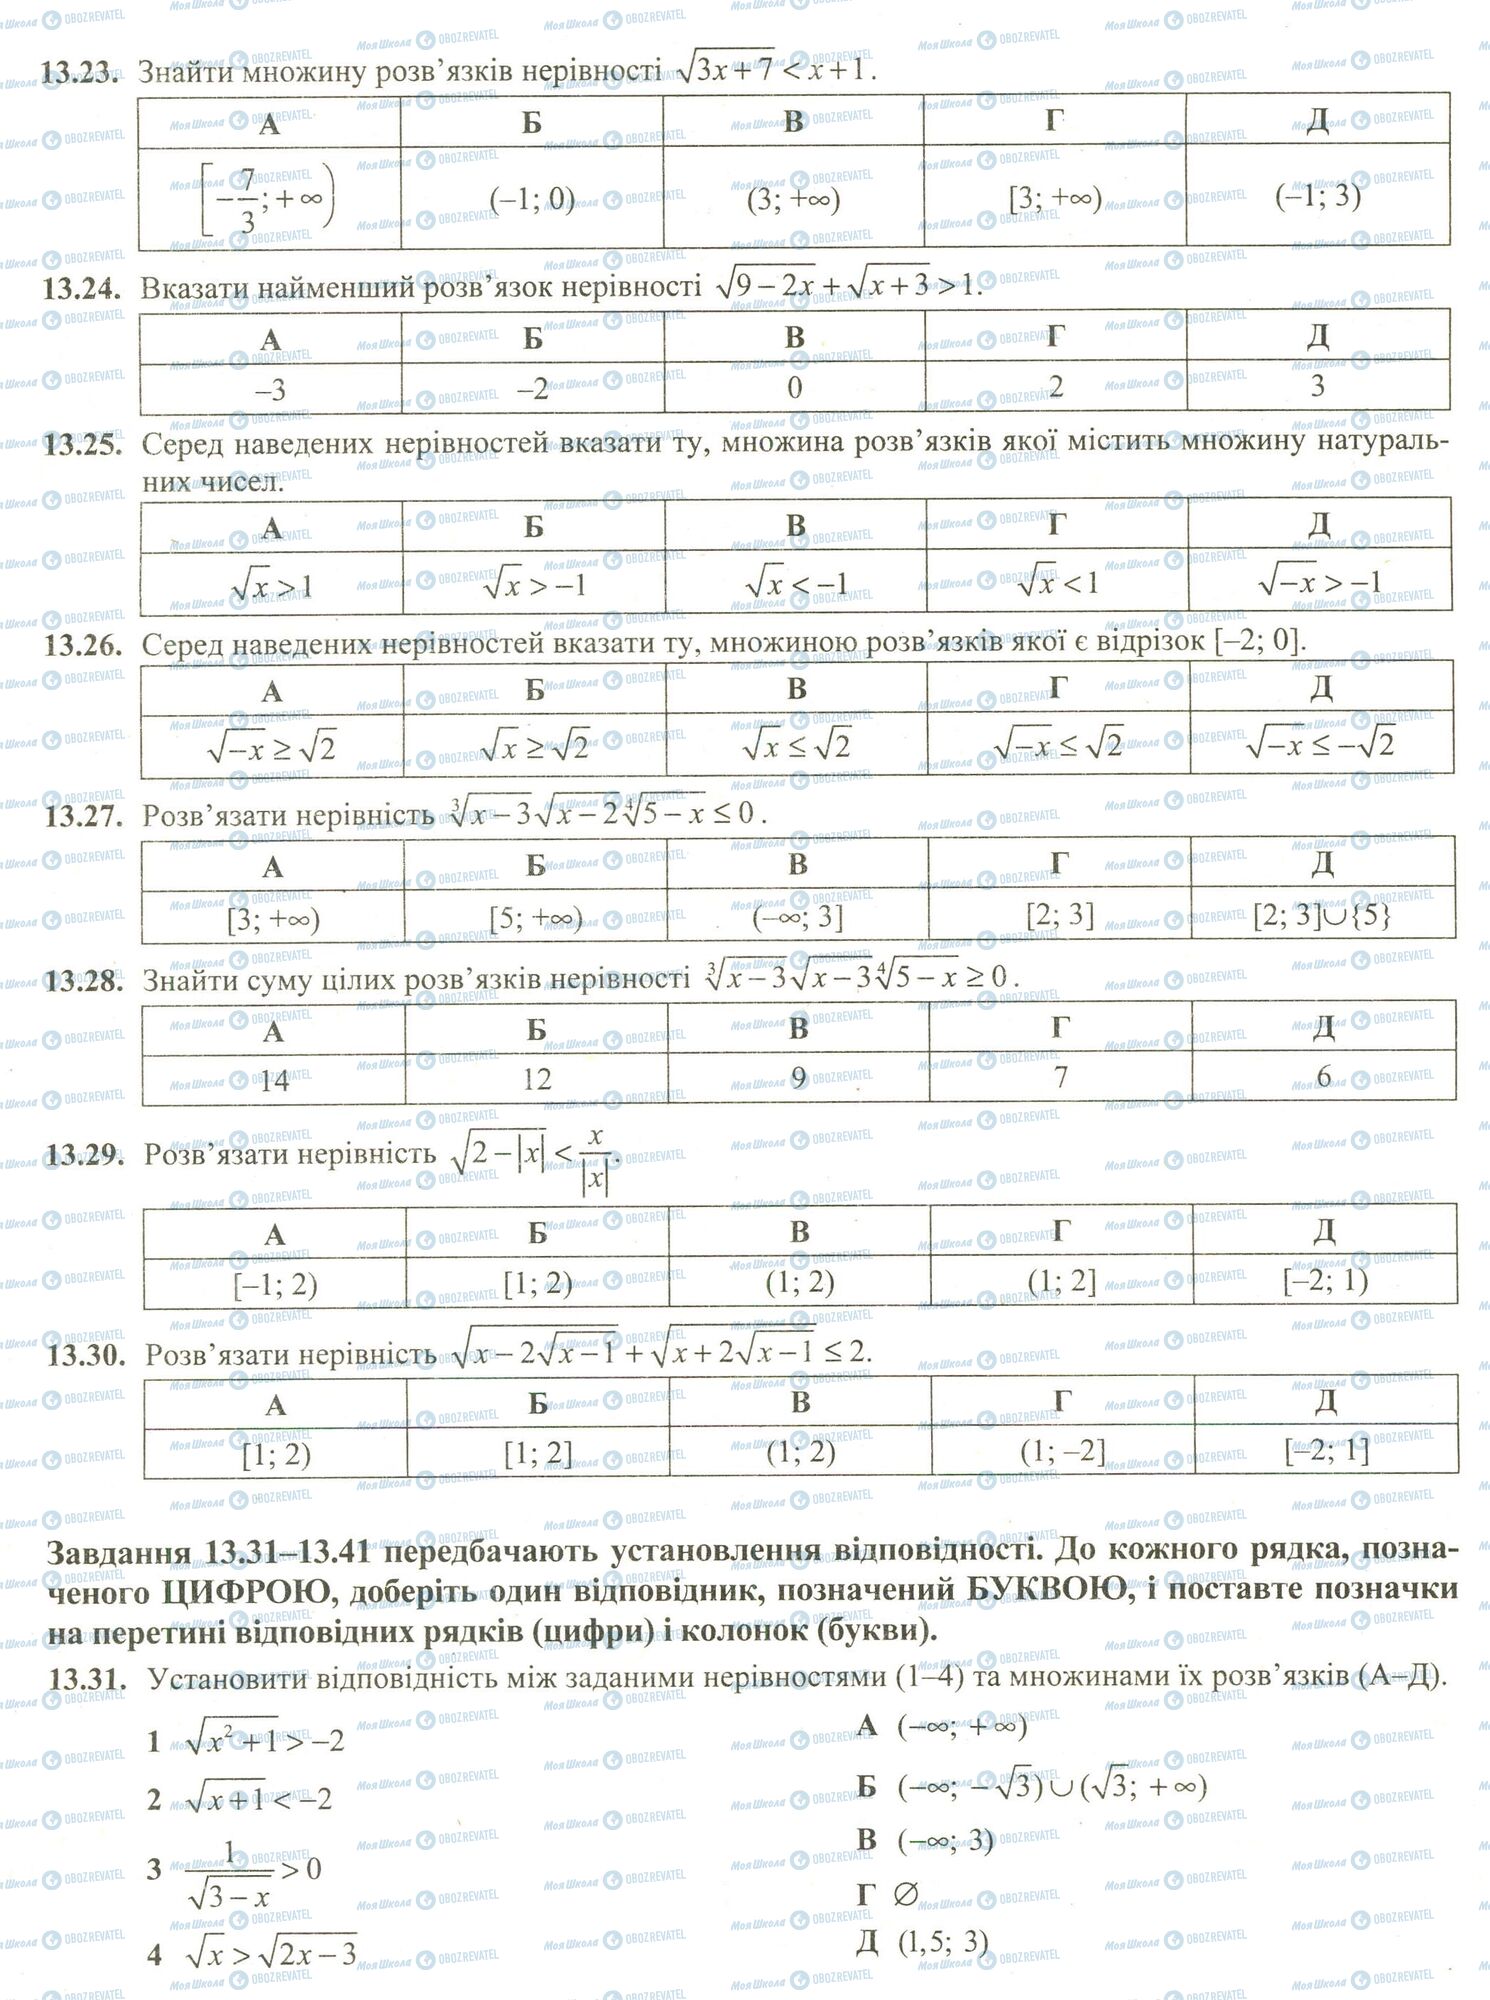 ЗНО Математика 11 класс страница 23-31